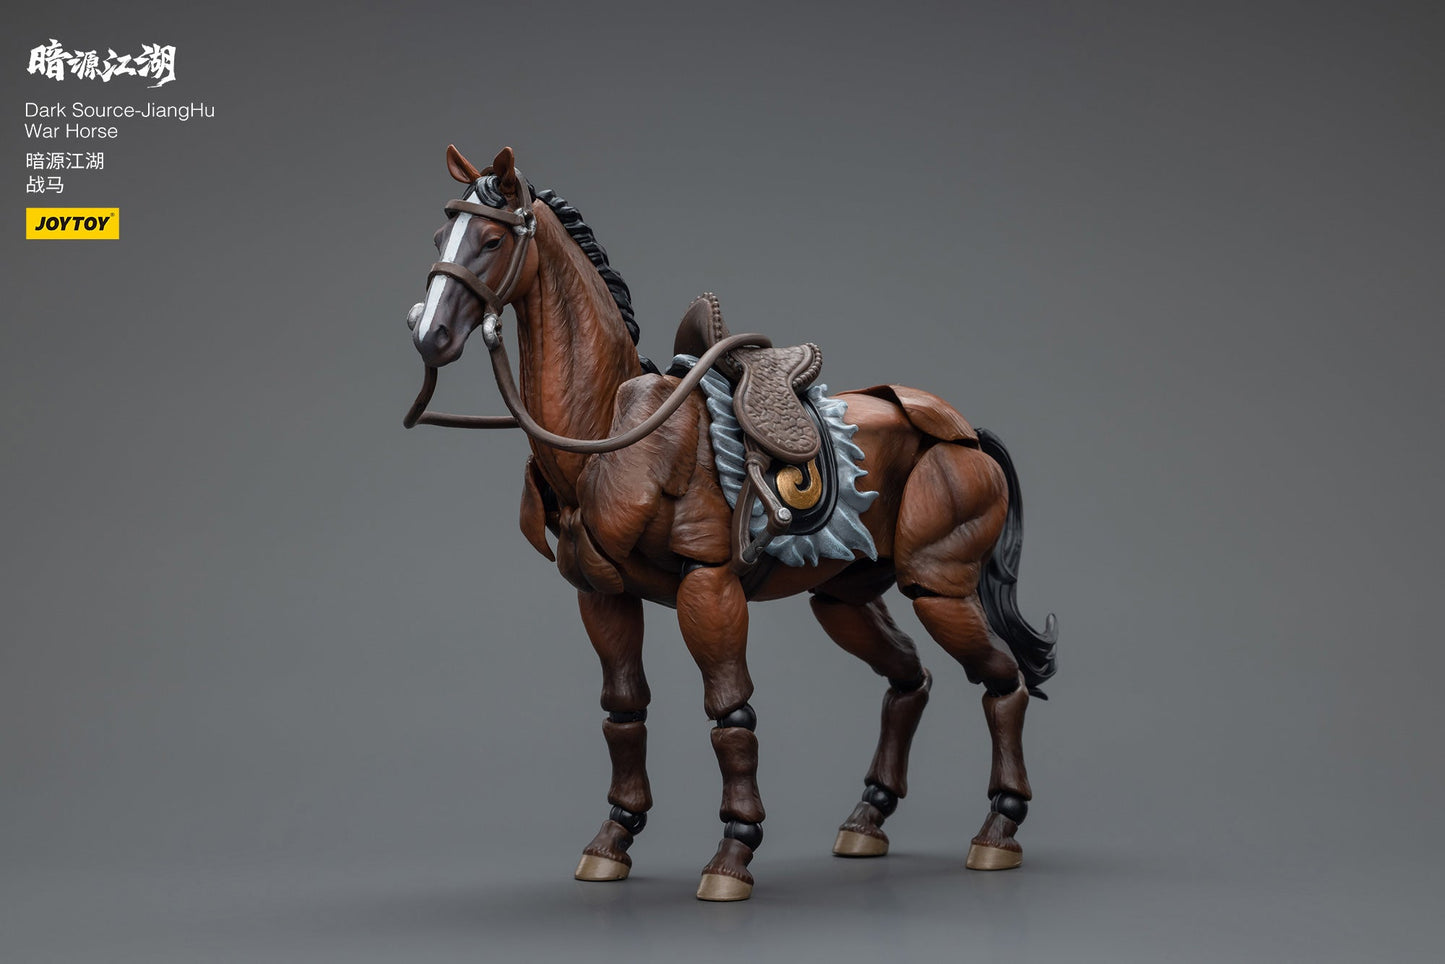 Dark Source-JiangHu War Horse - 1/18 Action Figure By Joytoy